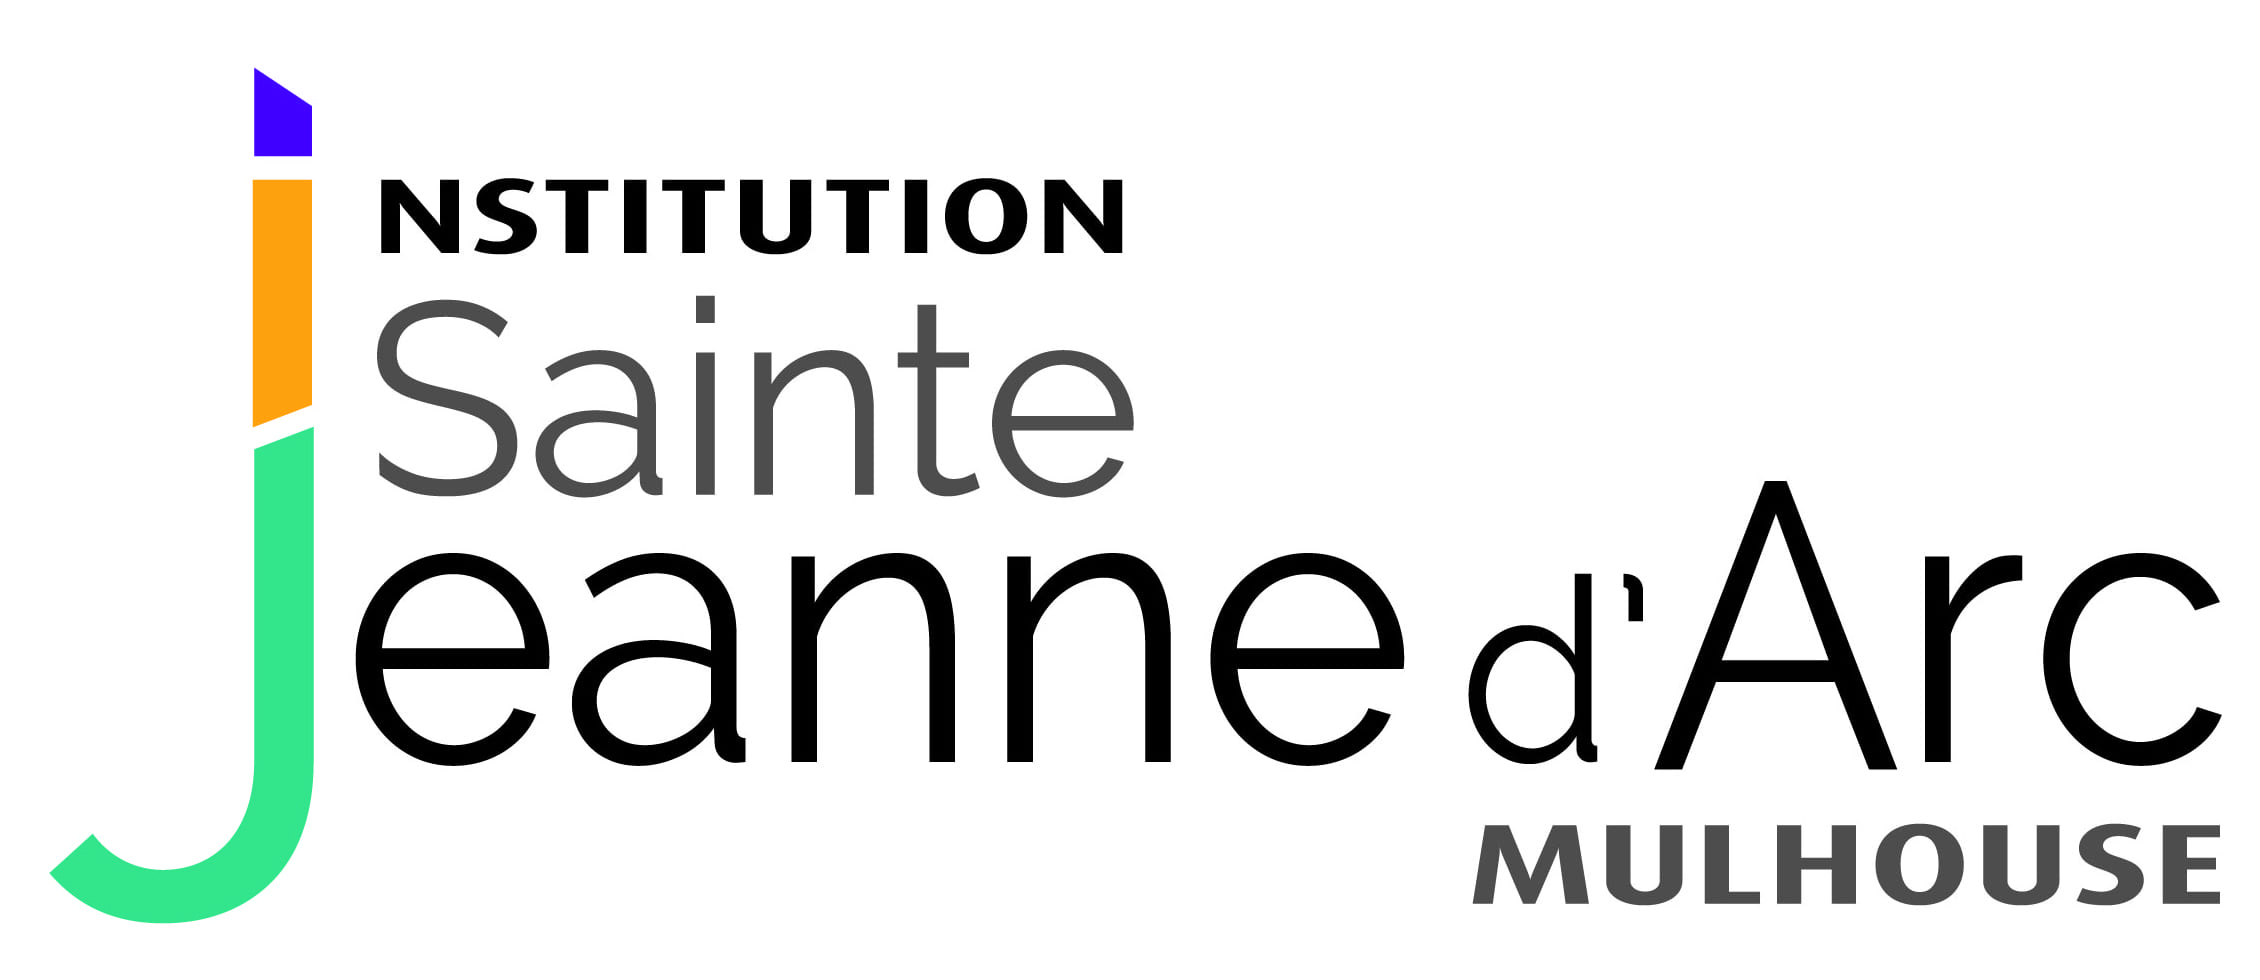 Institution-sainte-jeanne-d-arc-Mulhouse-new